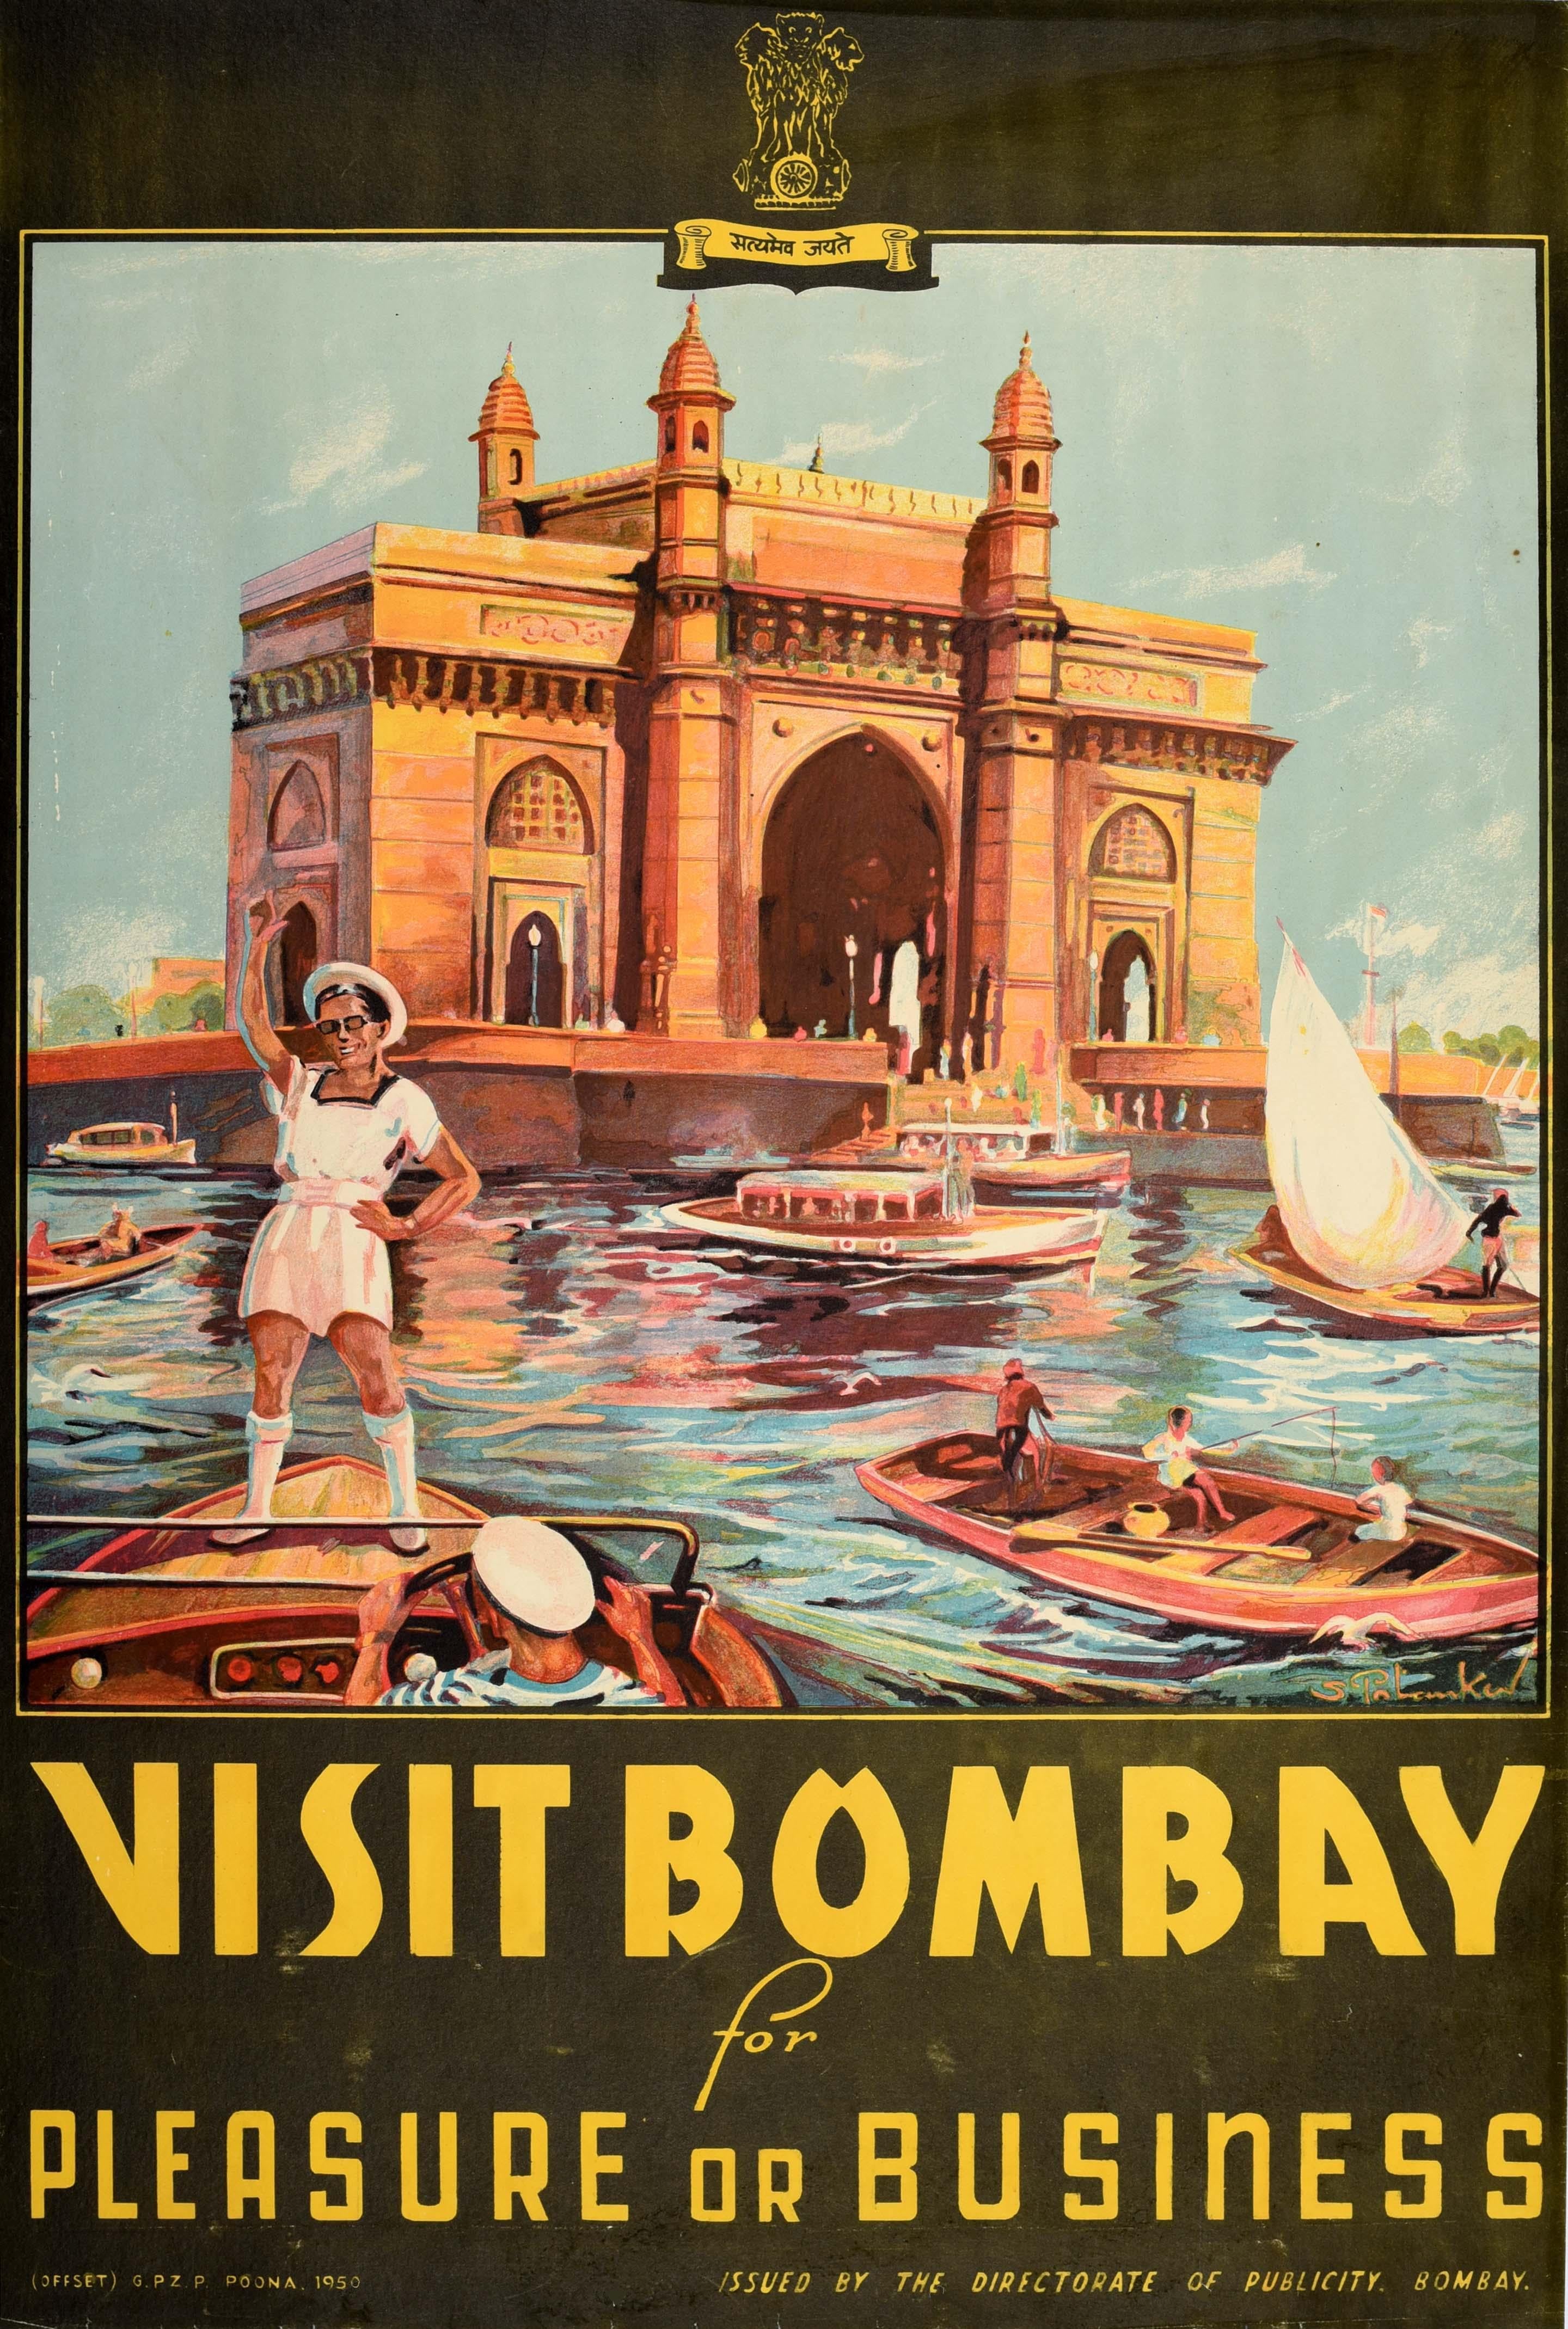 Unknown Print - Original Vintage Travel Poster Visit Bombay Pleasure Business Mumbai India